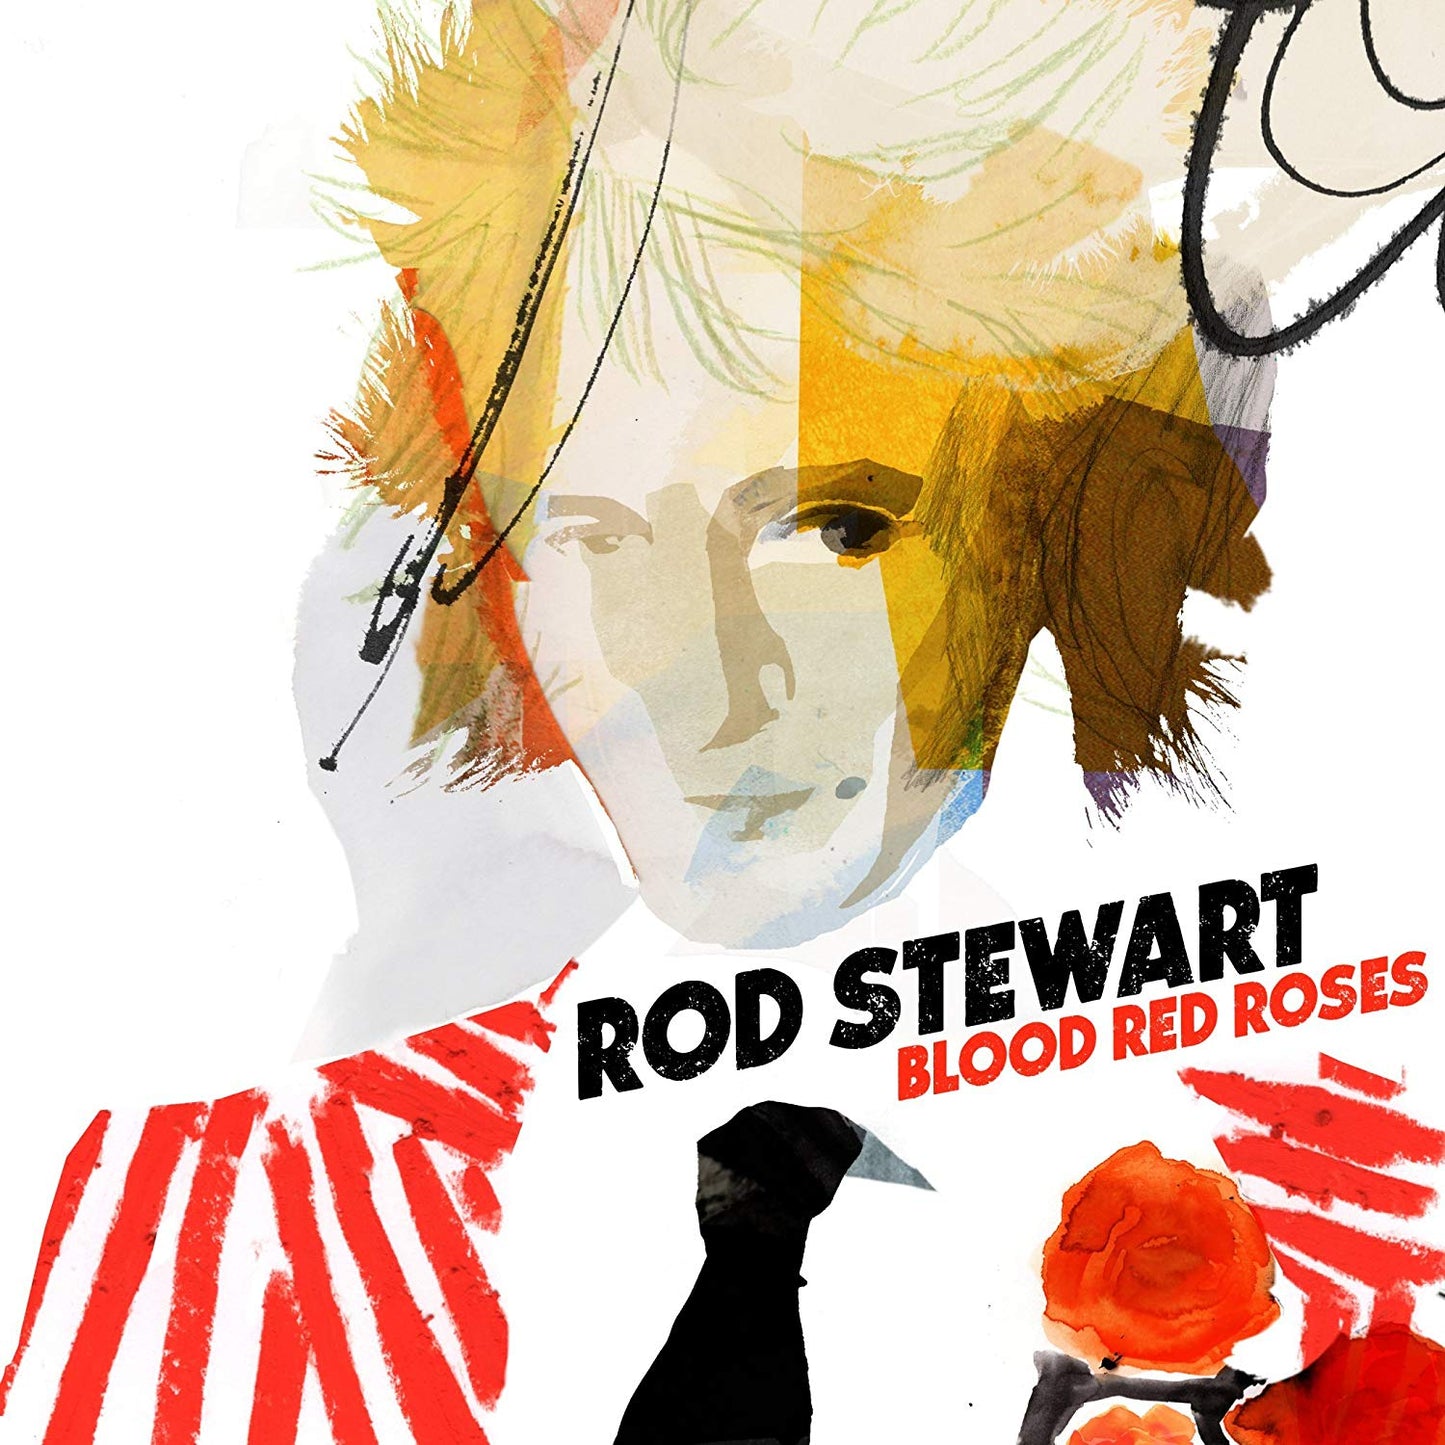 Blood Red Roses - Rod Stewart Vinyl